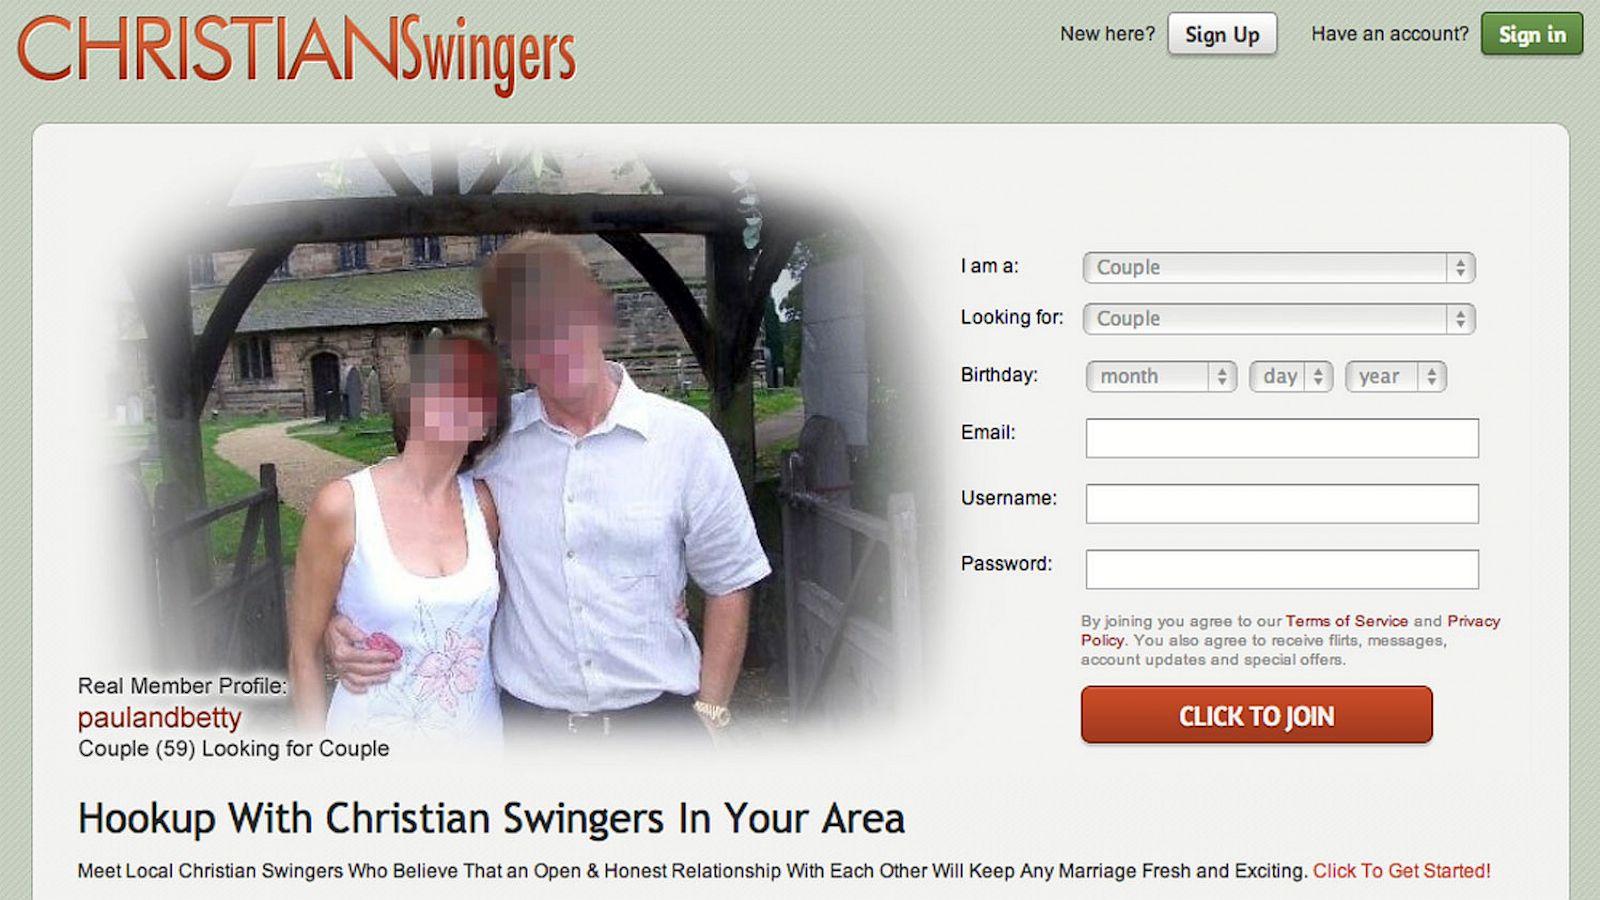 Christian Swingers? Even Progressive Pastors Are Shocked